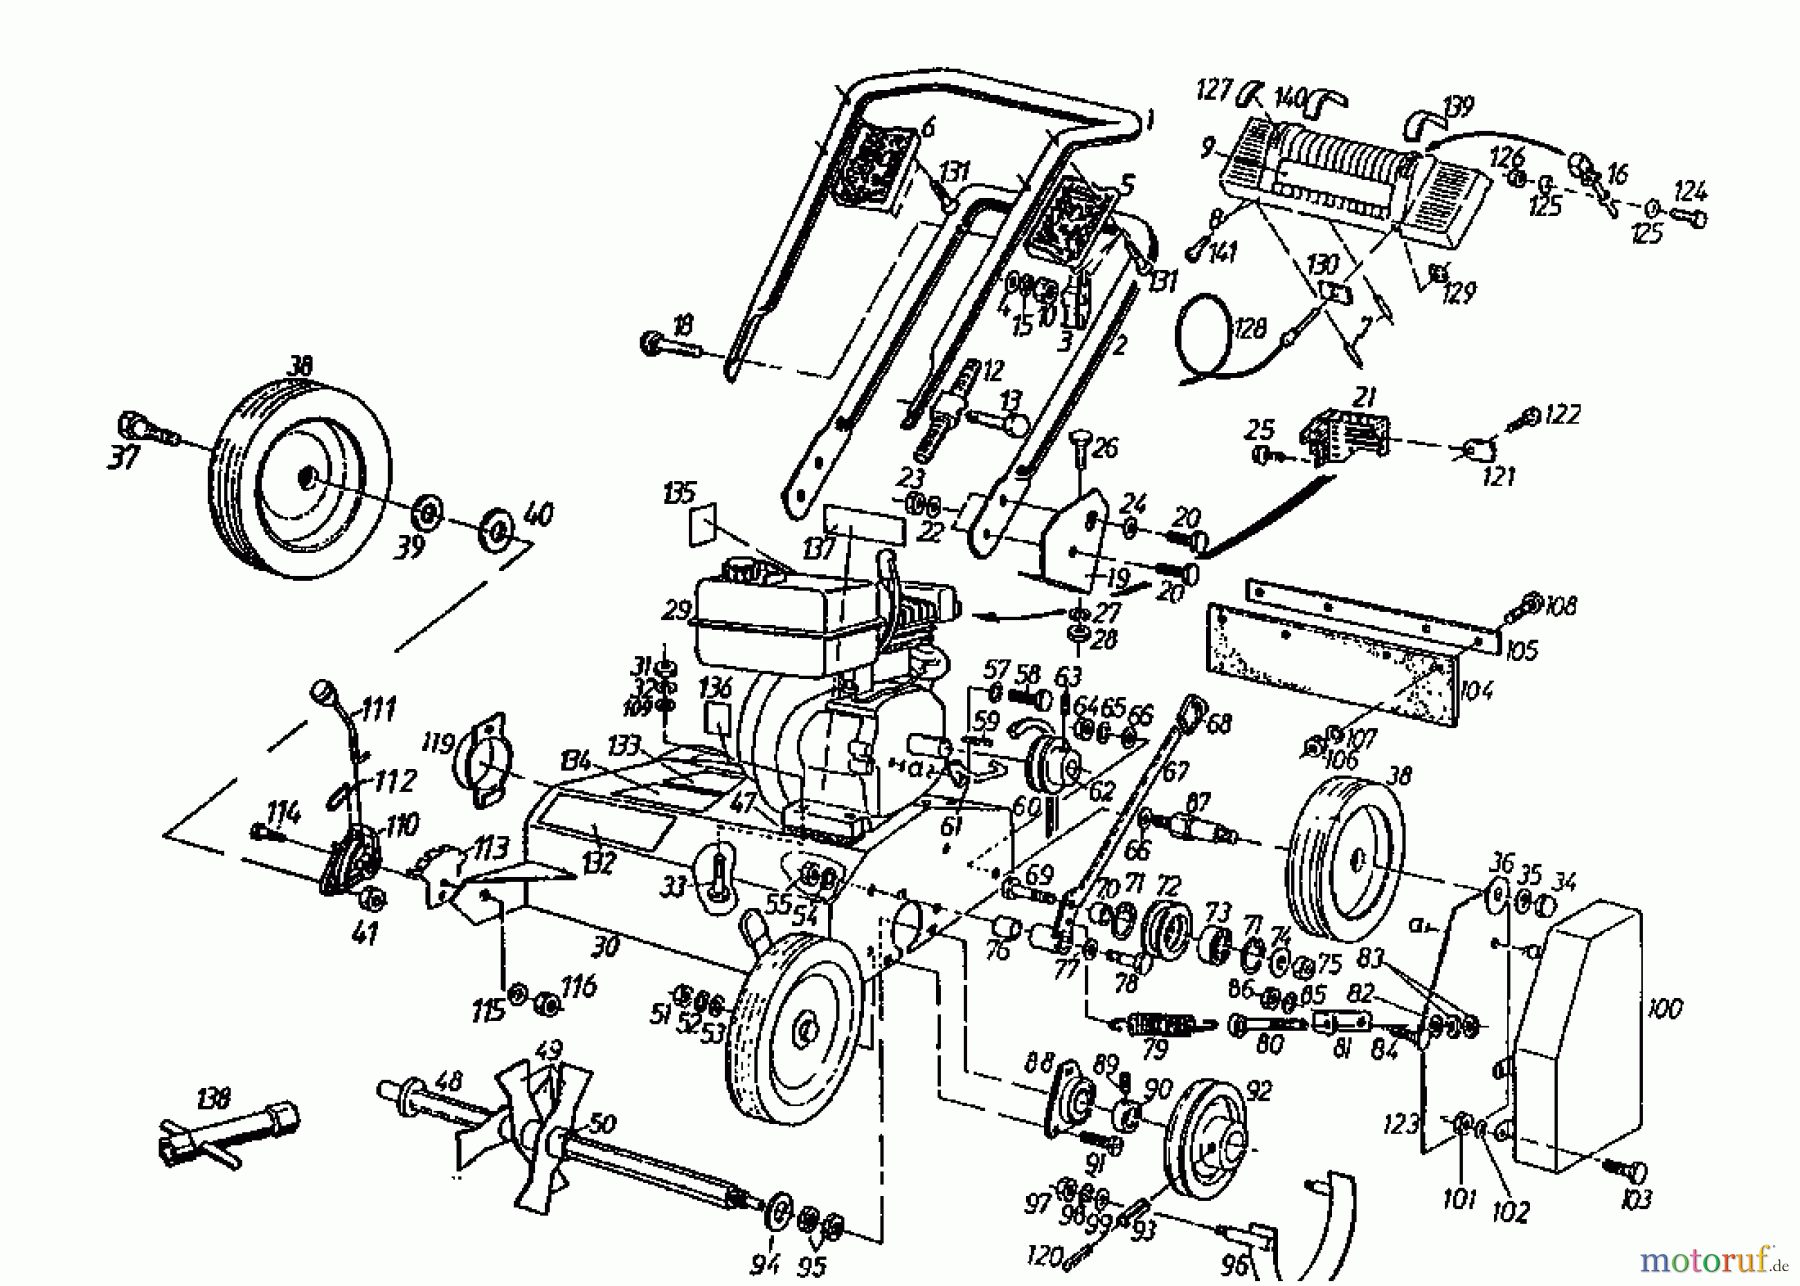  Gutbrod Petrol verticutter MV 504 00053.04  (1993) Basic machine